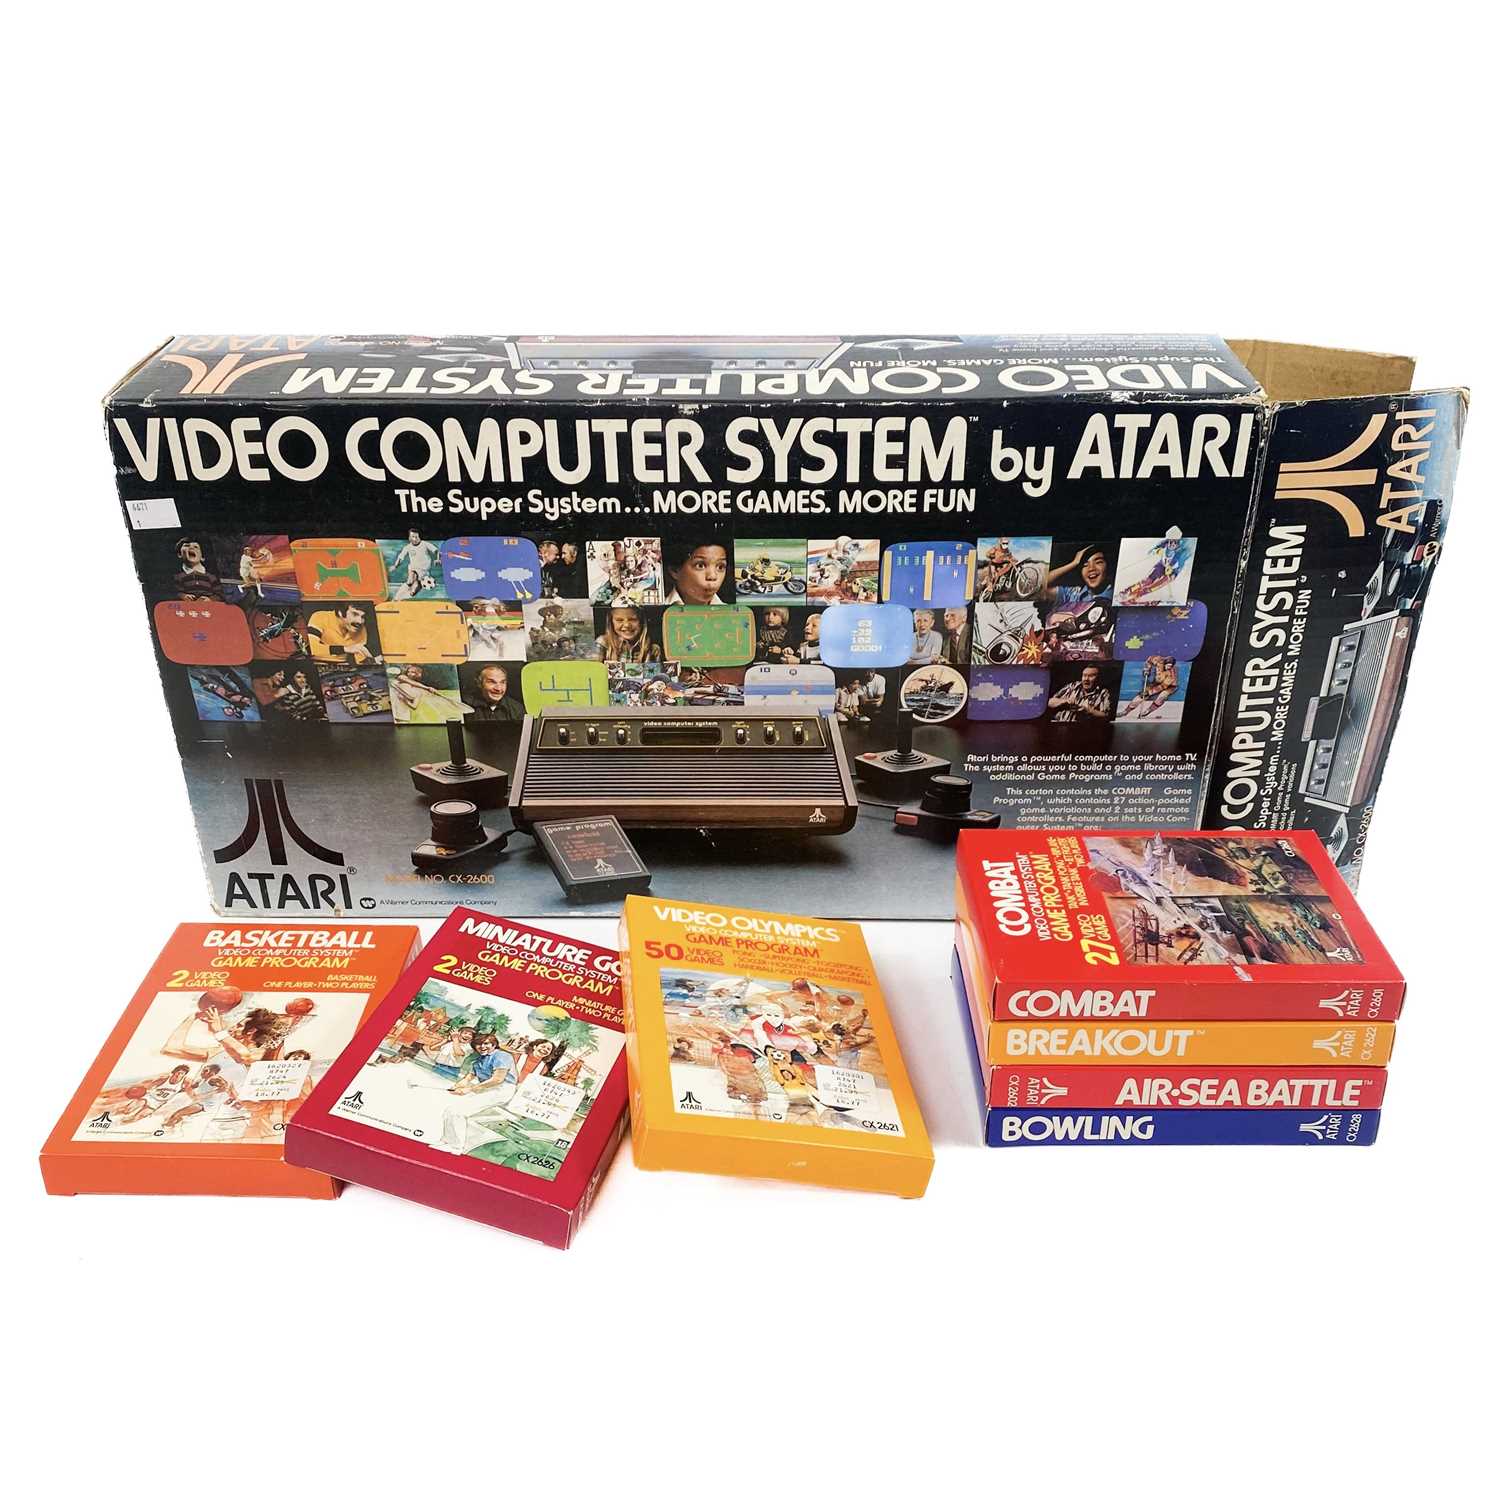 An Atari Video Computer System. - Image 4 of 5